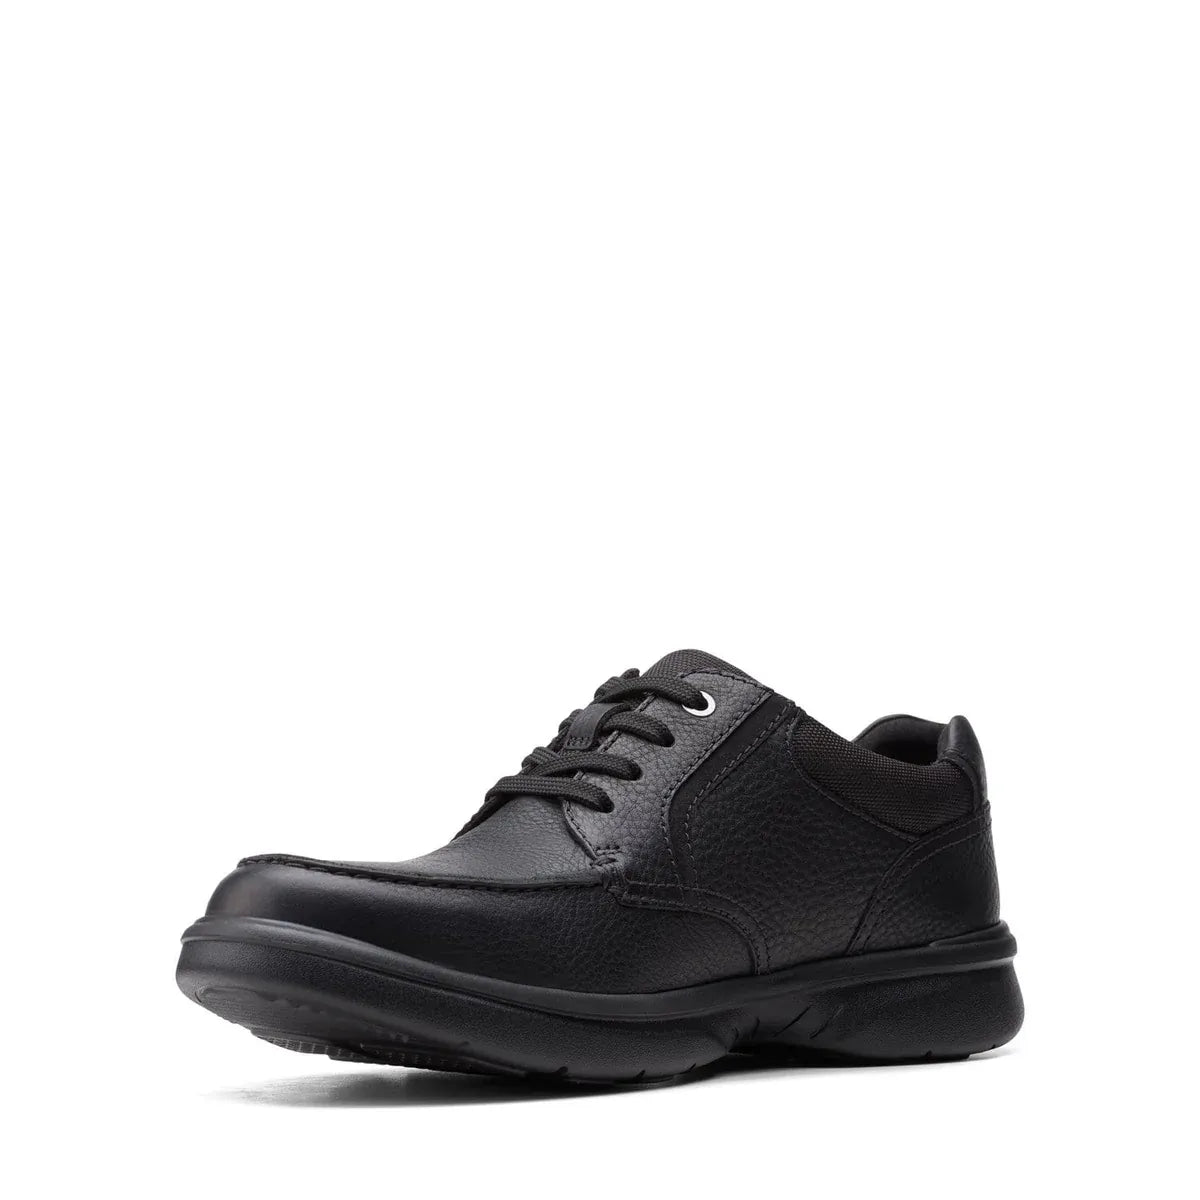 Clarks Bradley Vibe Black Men's Shoes - Wide Fit, Endless Comfort